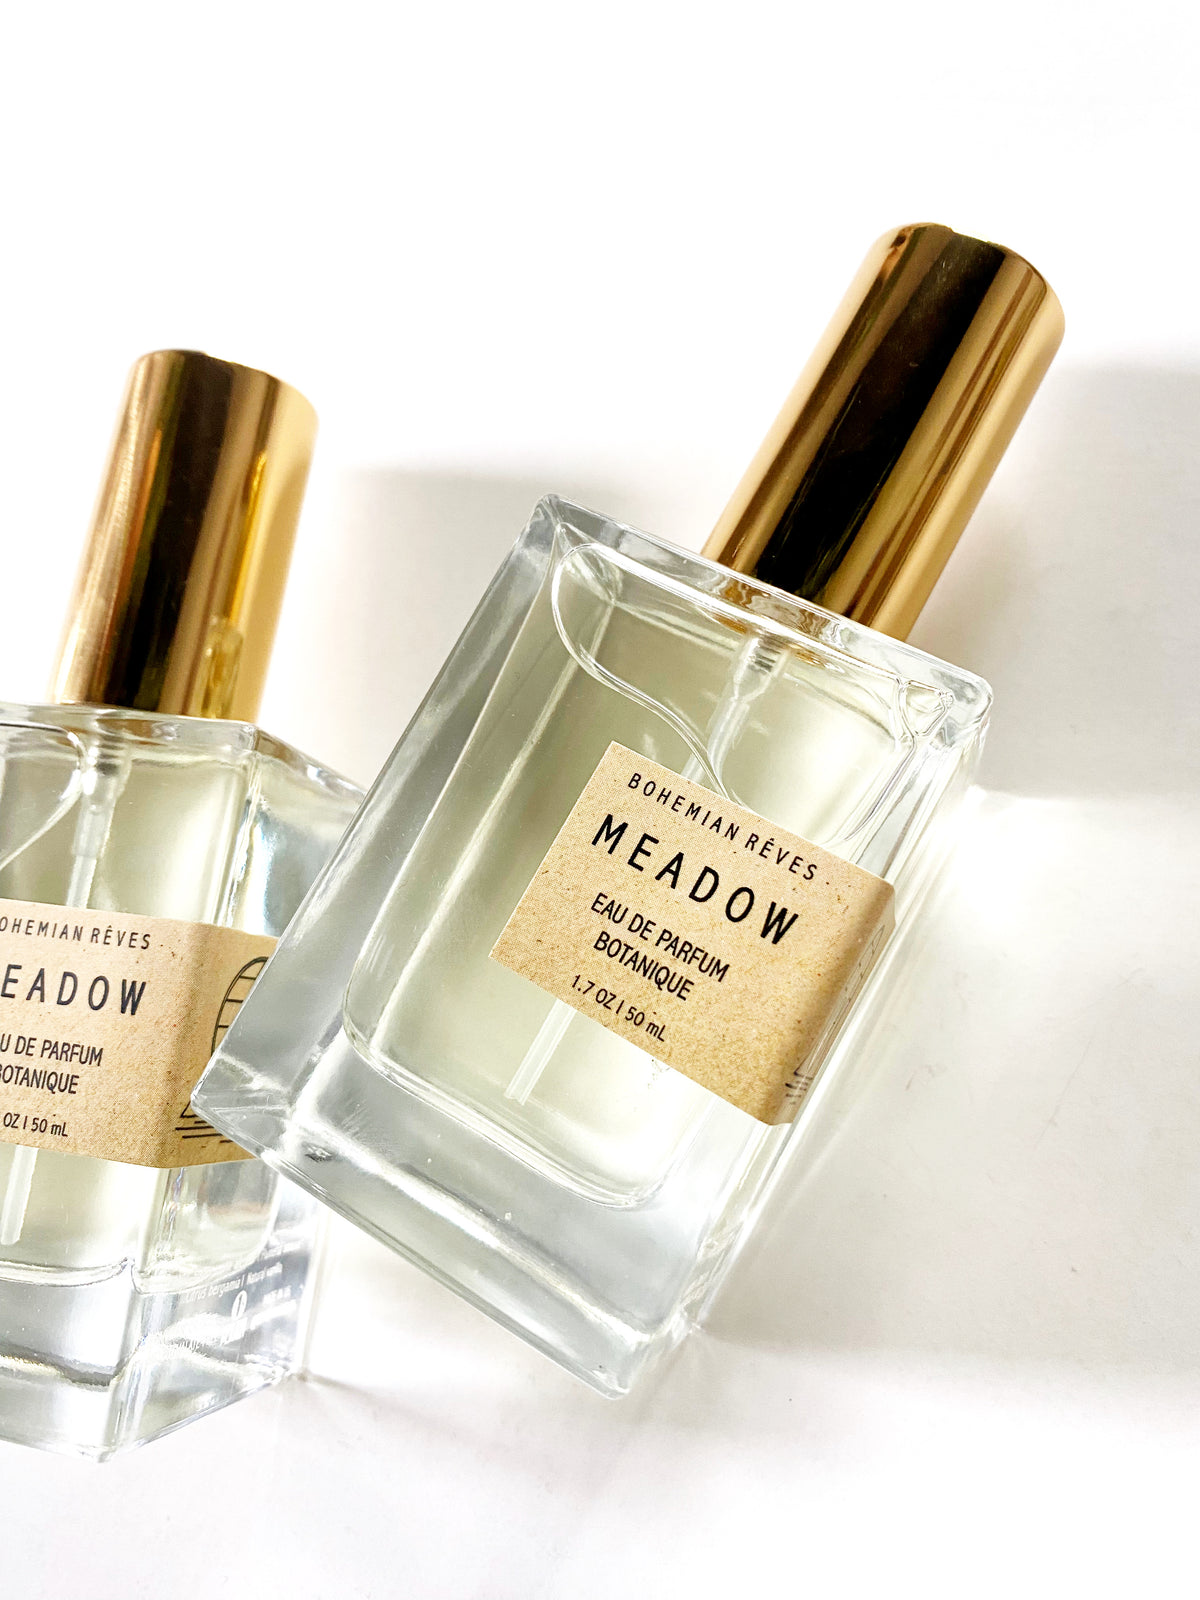 Bohemian Reves: Meadow Botanical Perfume Mist 1.7oz